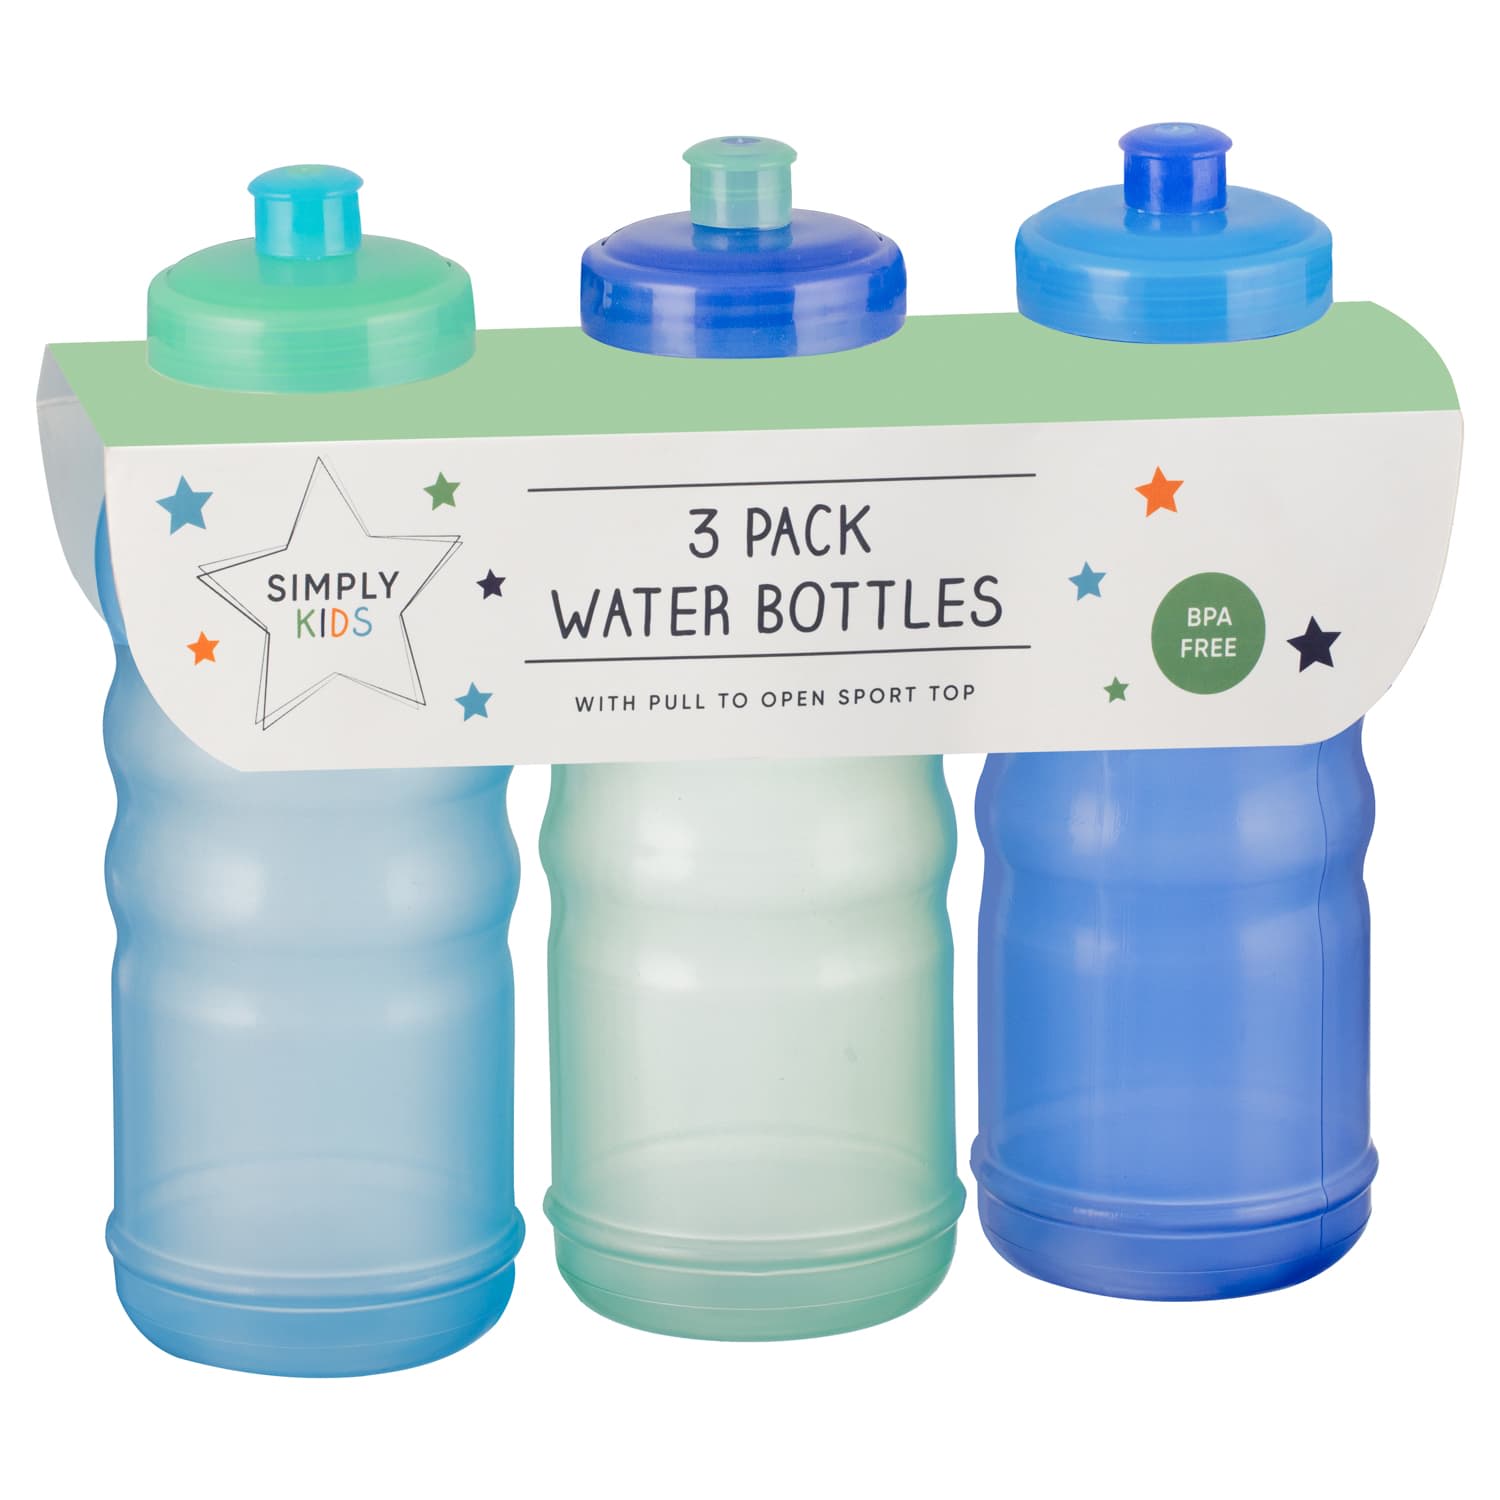 https://www.bmstores.co.uk/images/hpcProductImage/imgSource/392258-3pk-simply-kids-water-bottles-boys.jpg